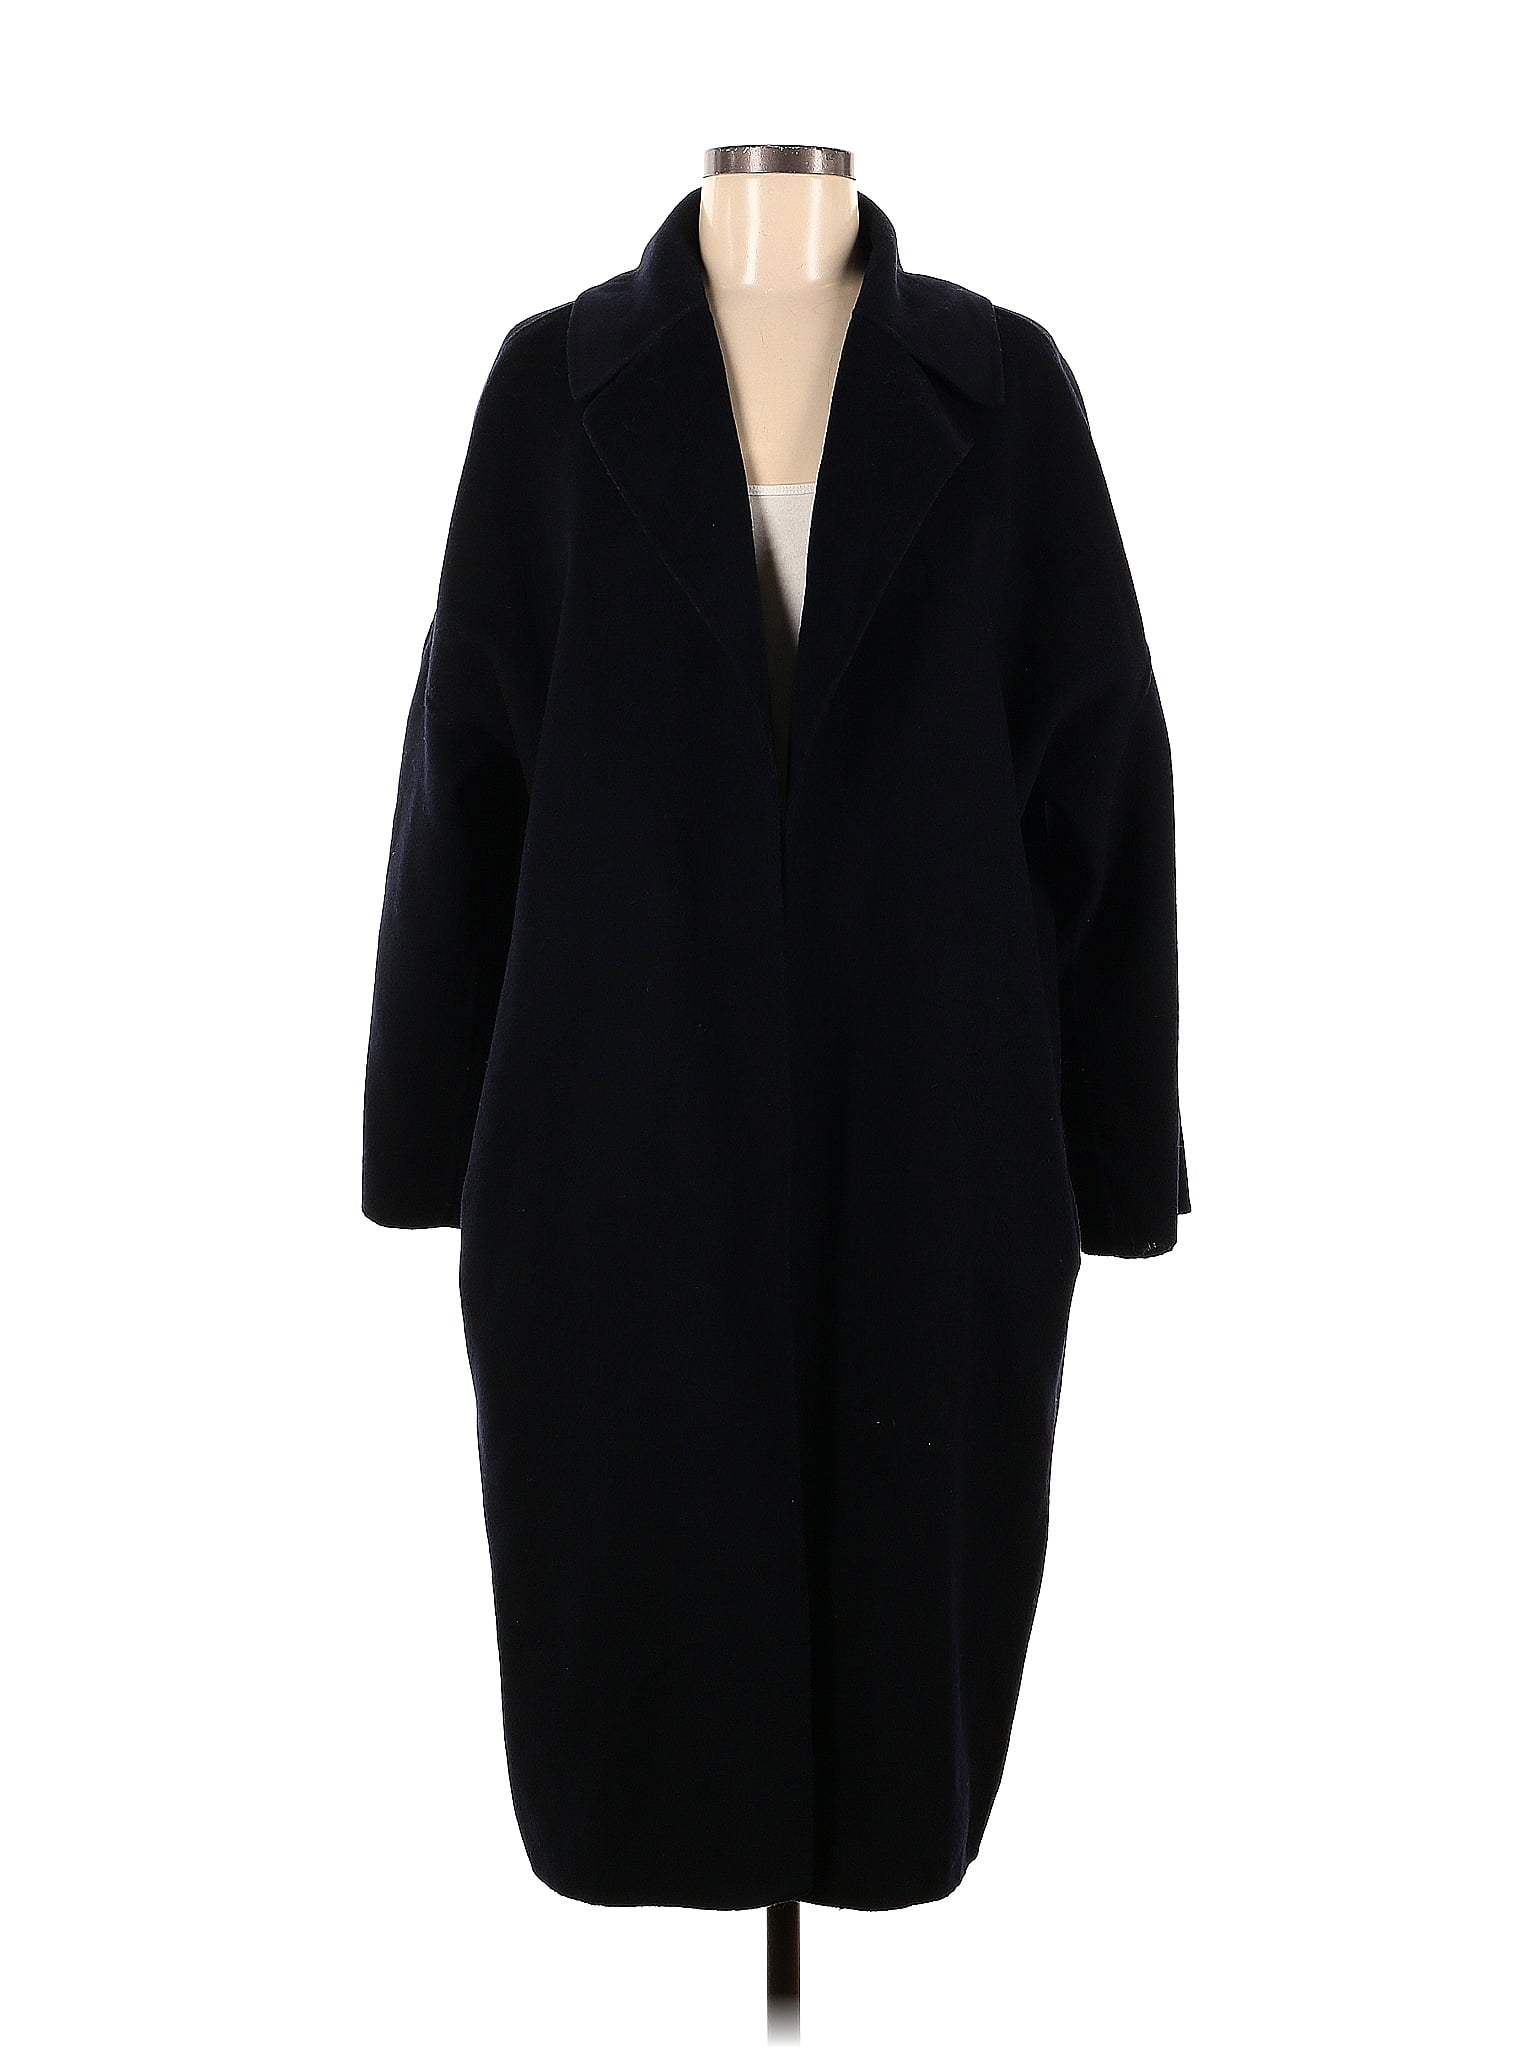 Zara Basic Solid Black Wool Coat Size M - 53% off | thredUP